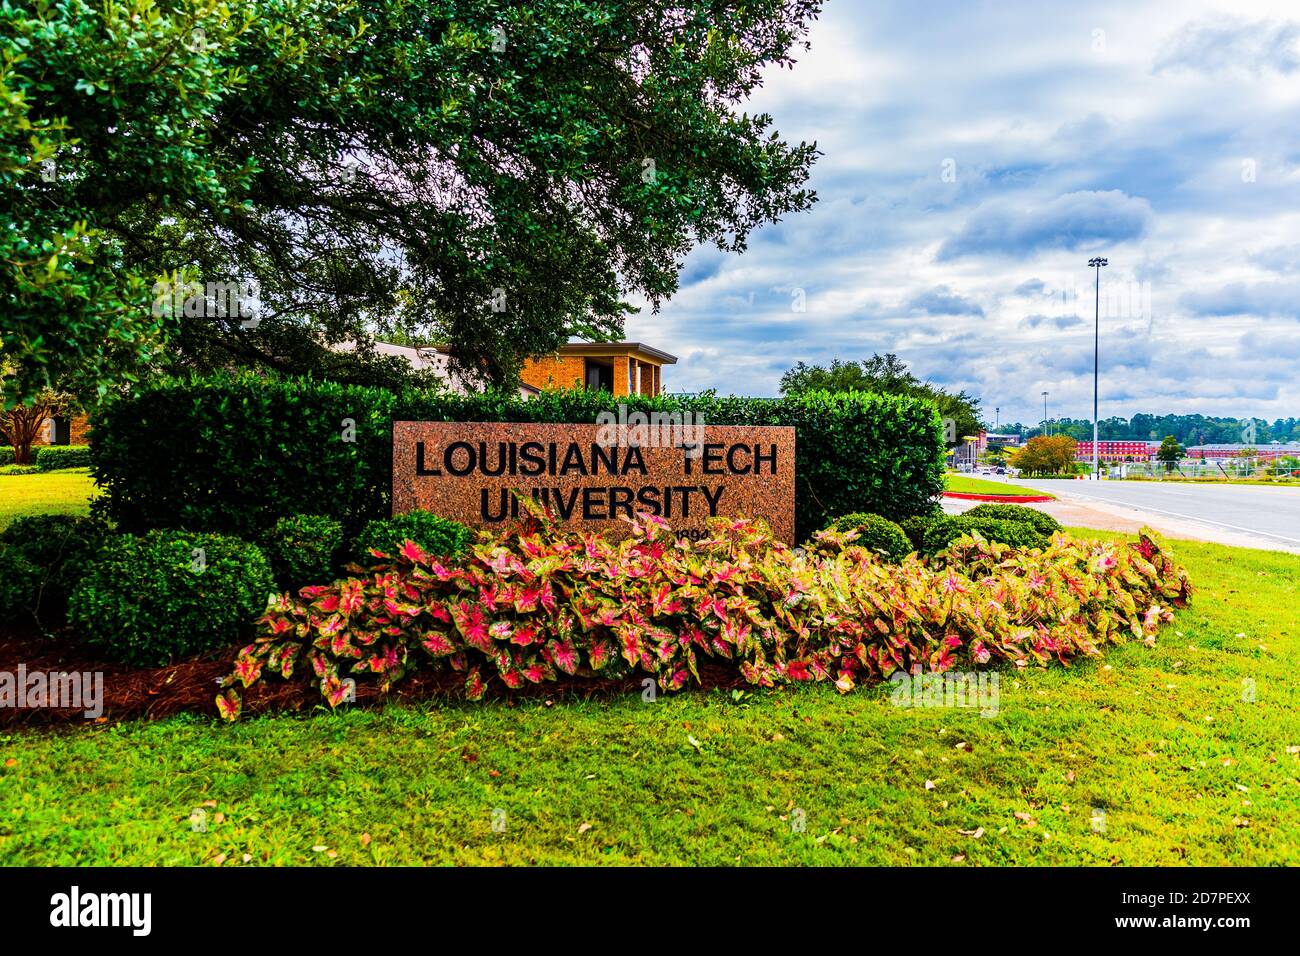 Ruston, LA / USA - October 10, 2020: Louisiana Tech University sign welcoming everyone to campus Stock Photo